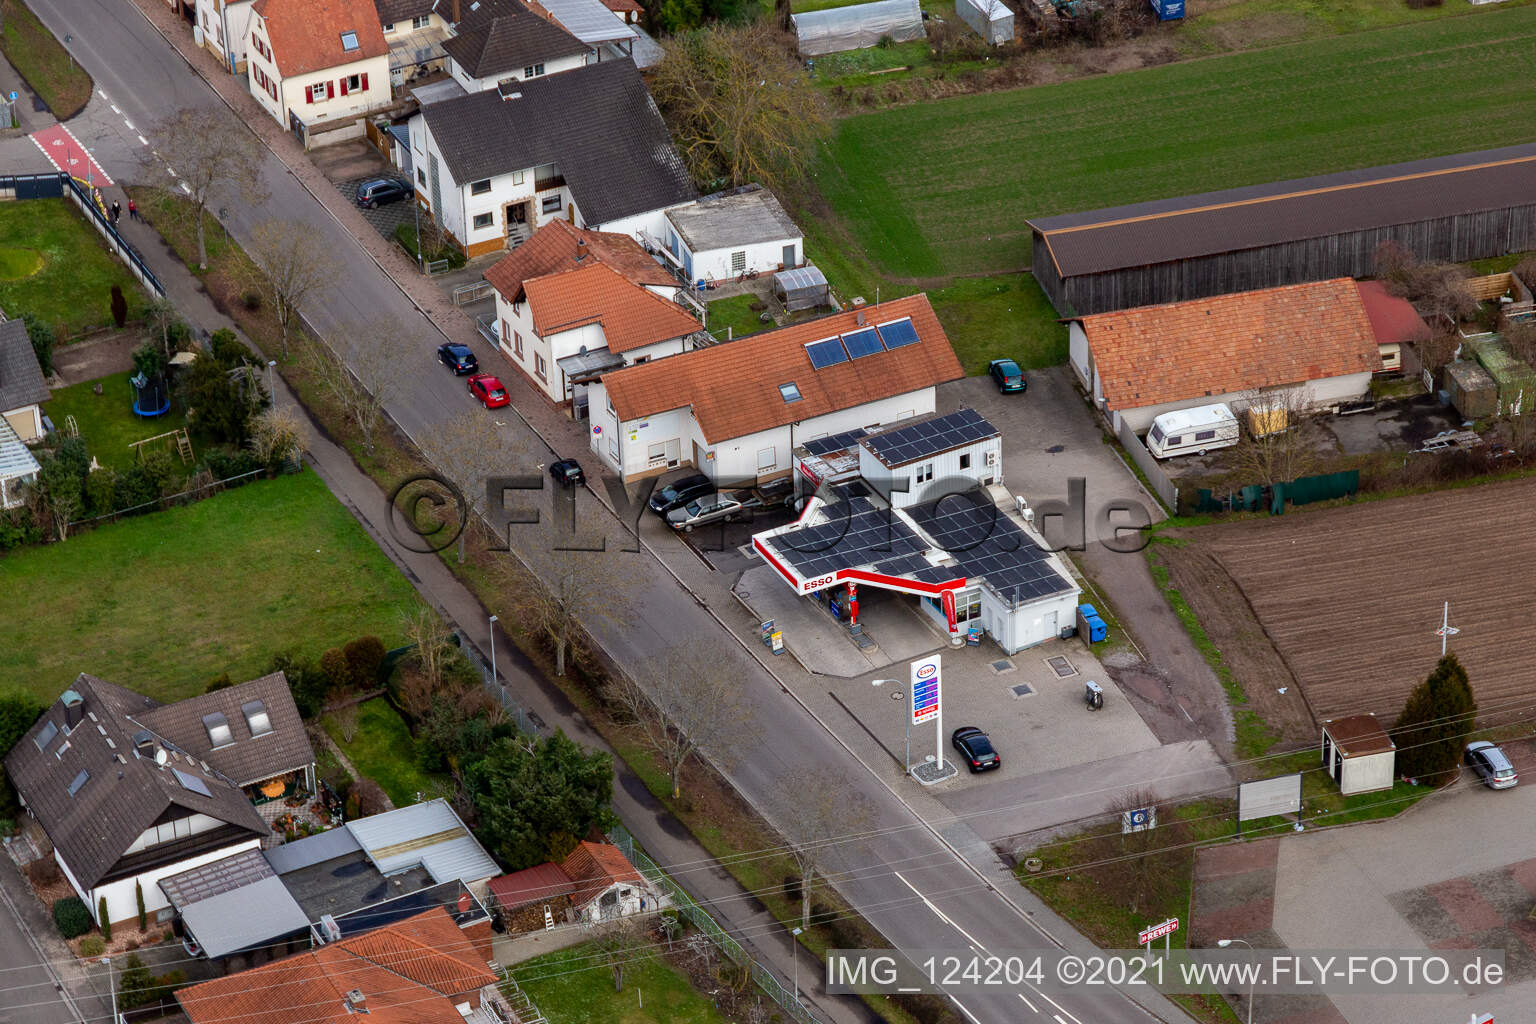 ESSO gas station in Rheinzabern in the state Rhineland-Palatinate, Germany